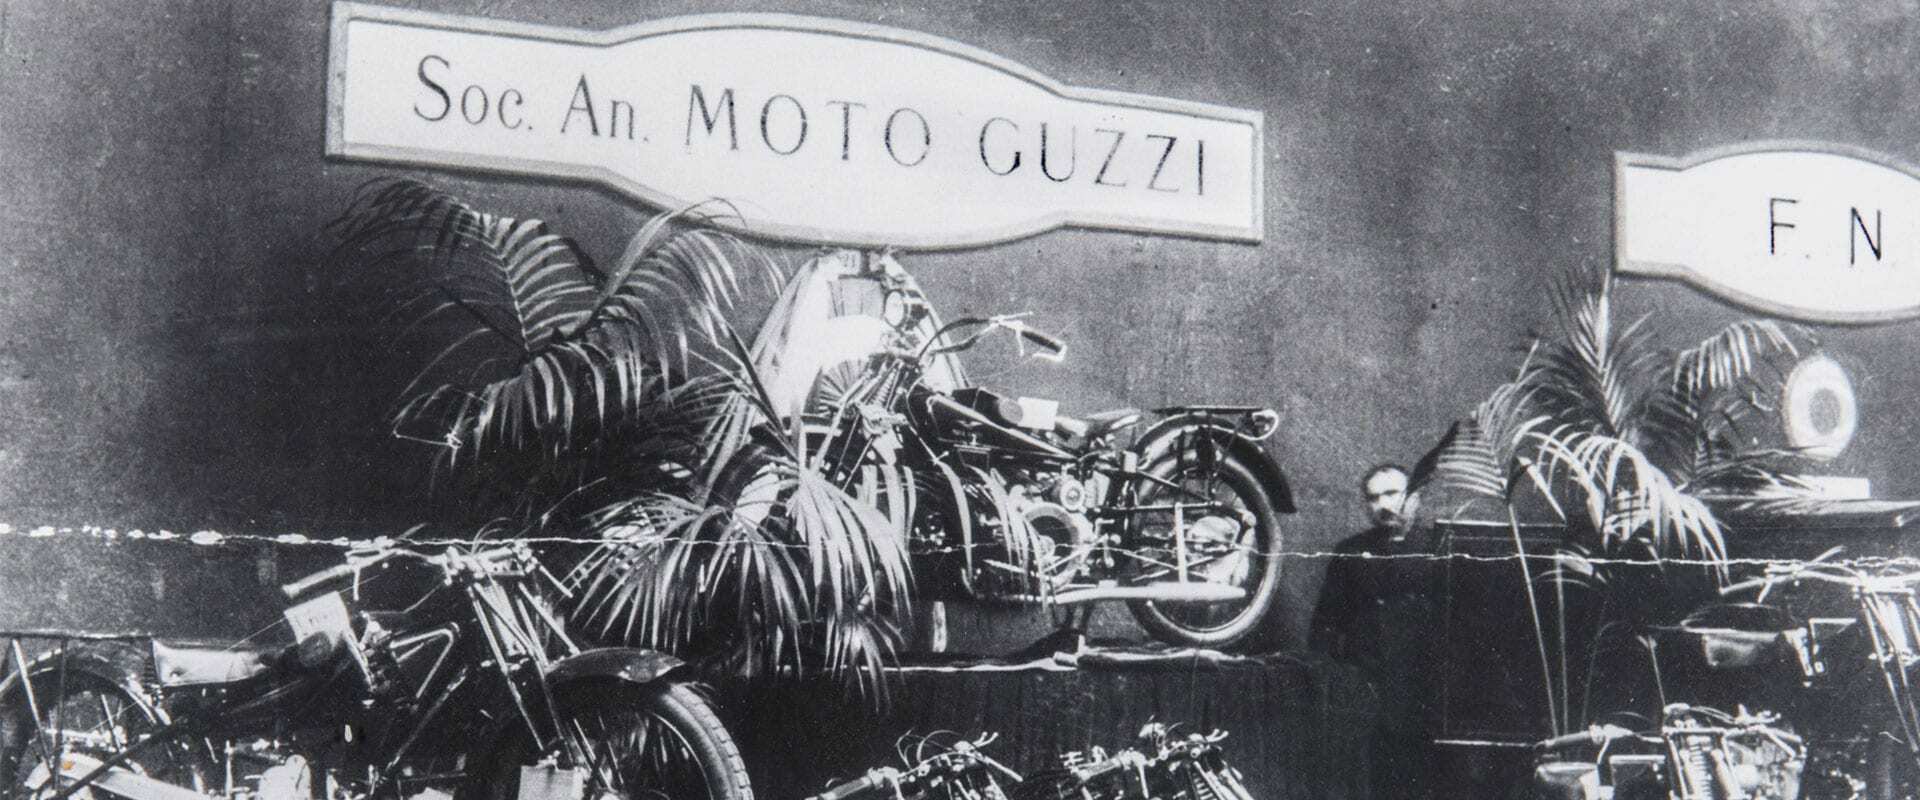 Moto Guzzi exposicion